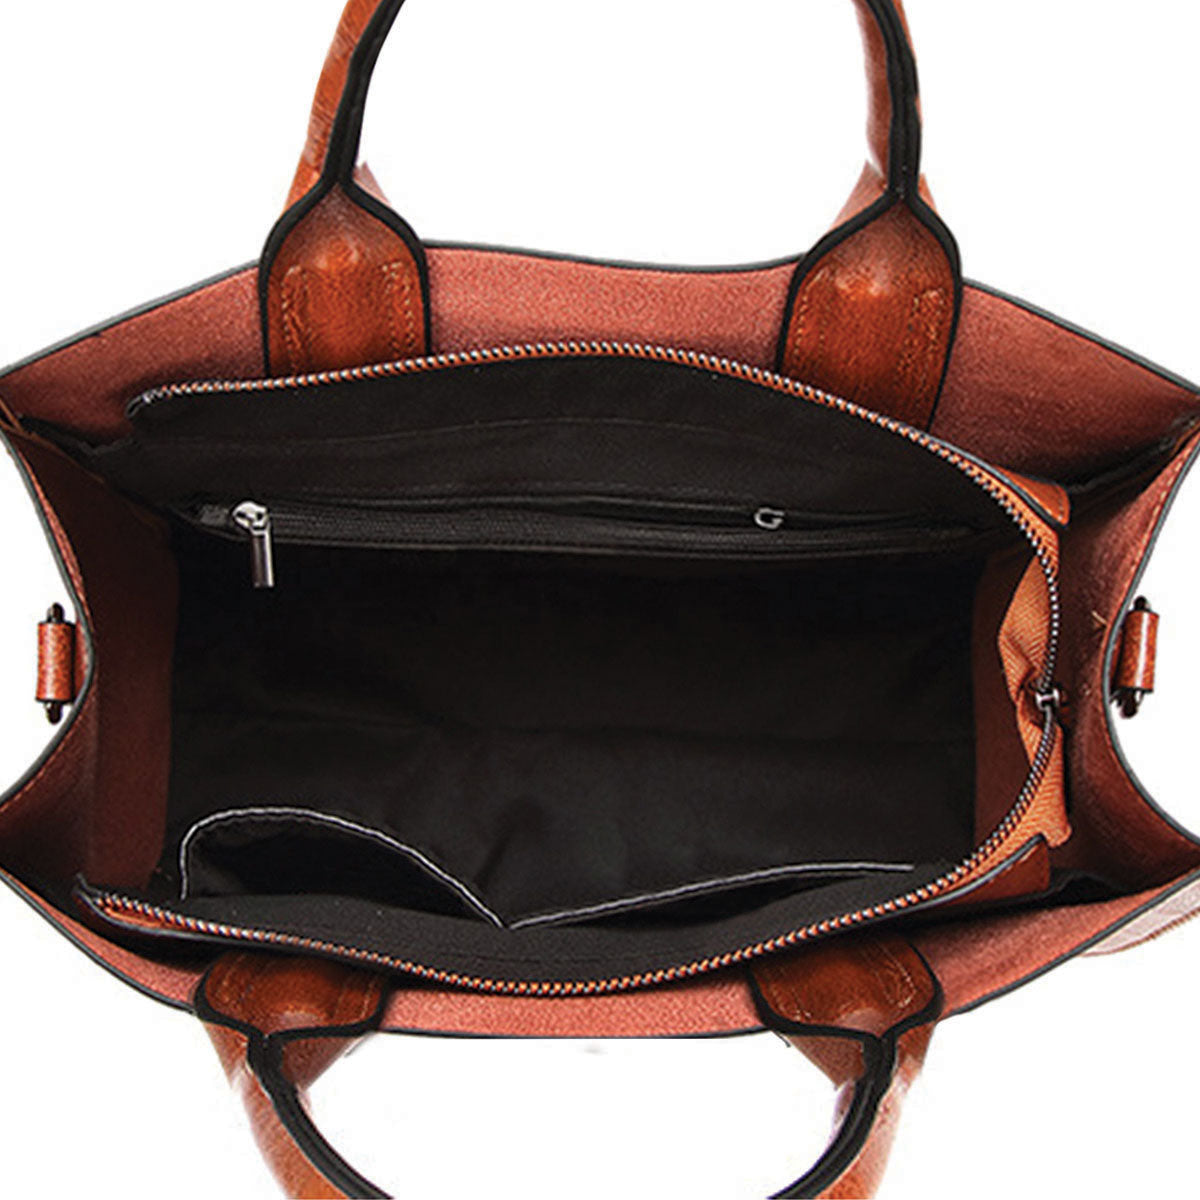 Your Best Companion - Pekingese Luxury Handbag V1